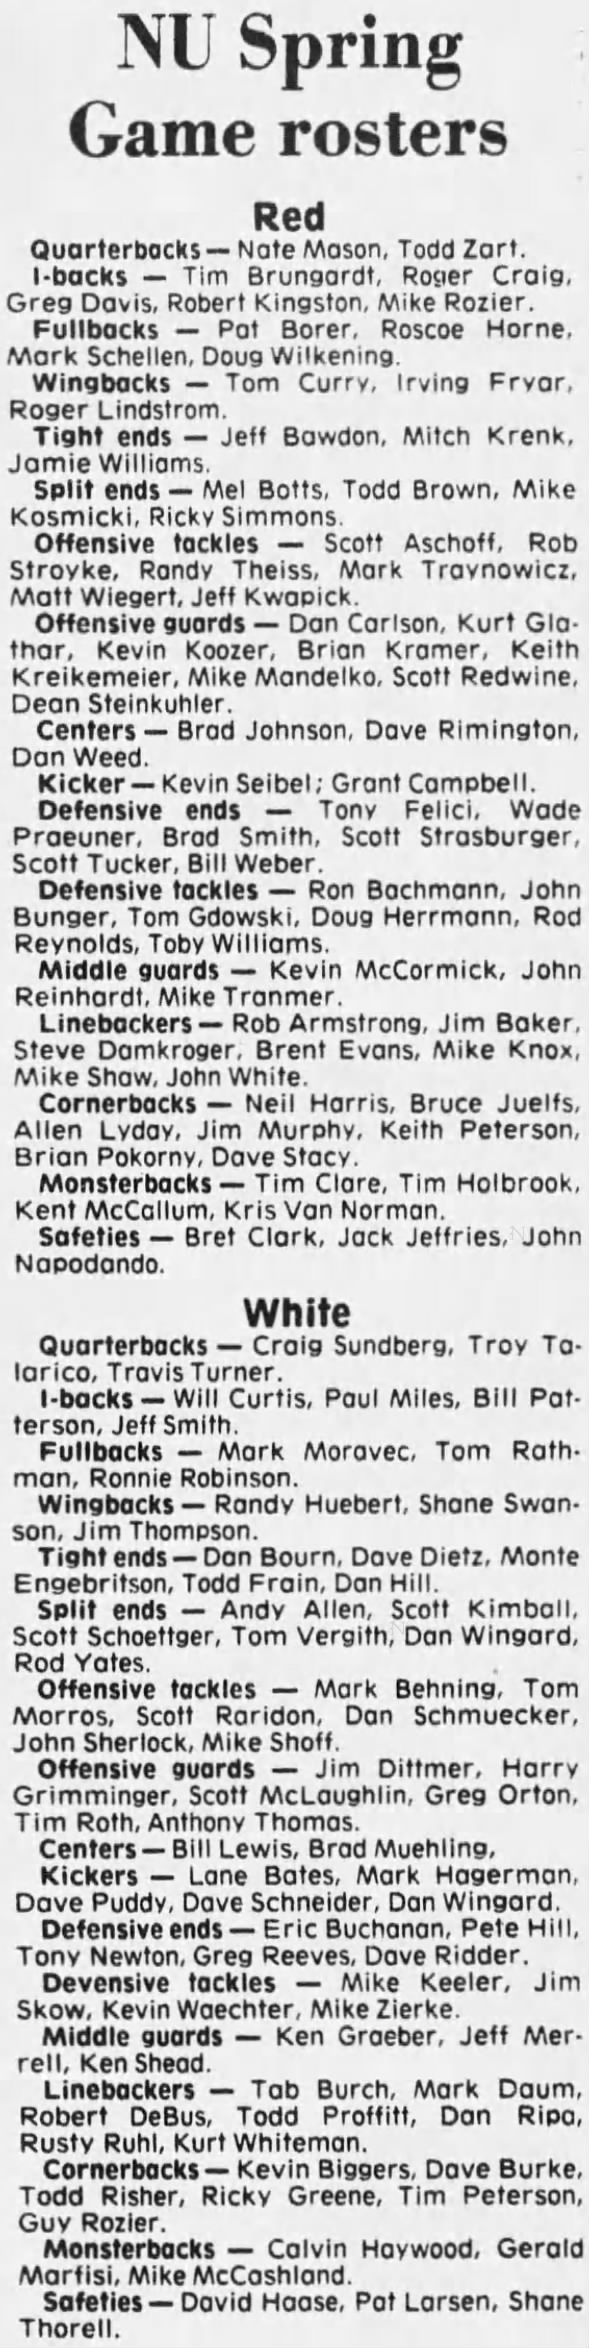 1982 Nebraska spring game Red-White rosters